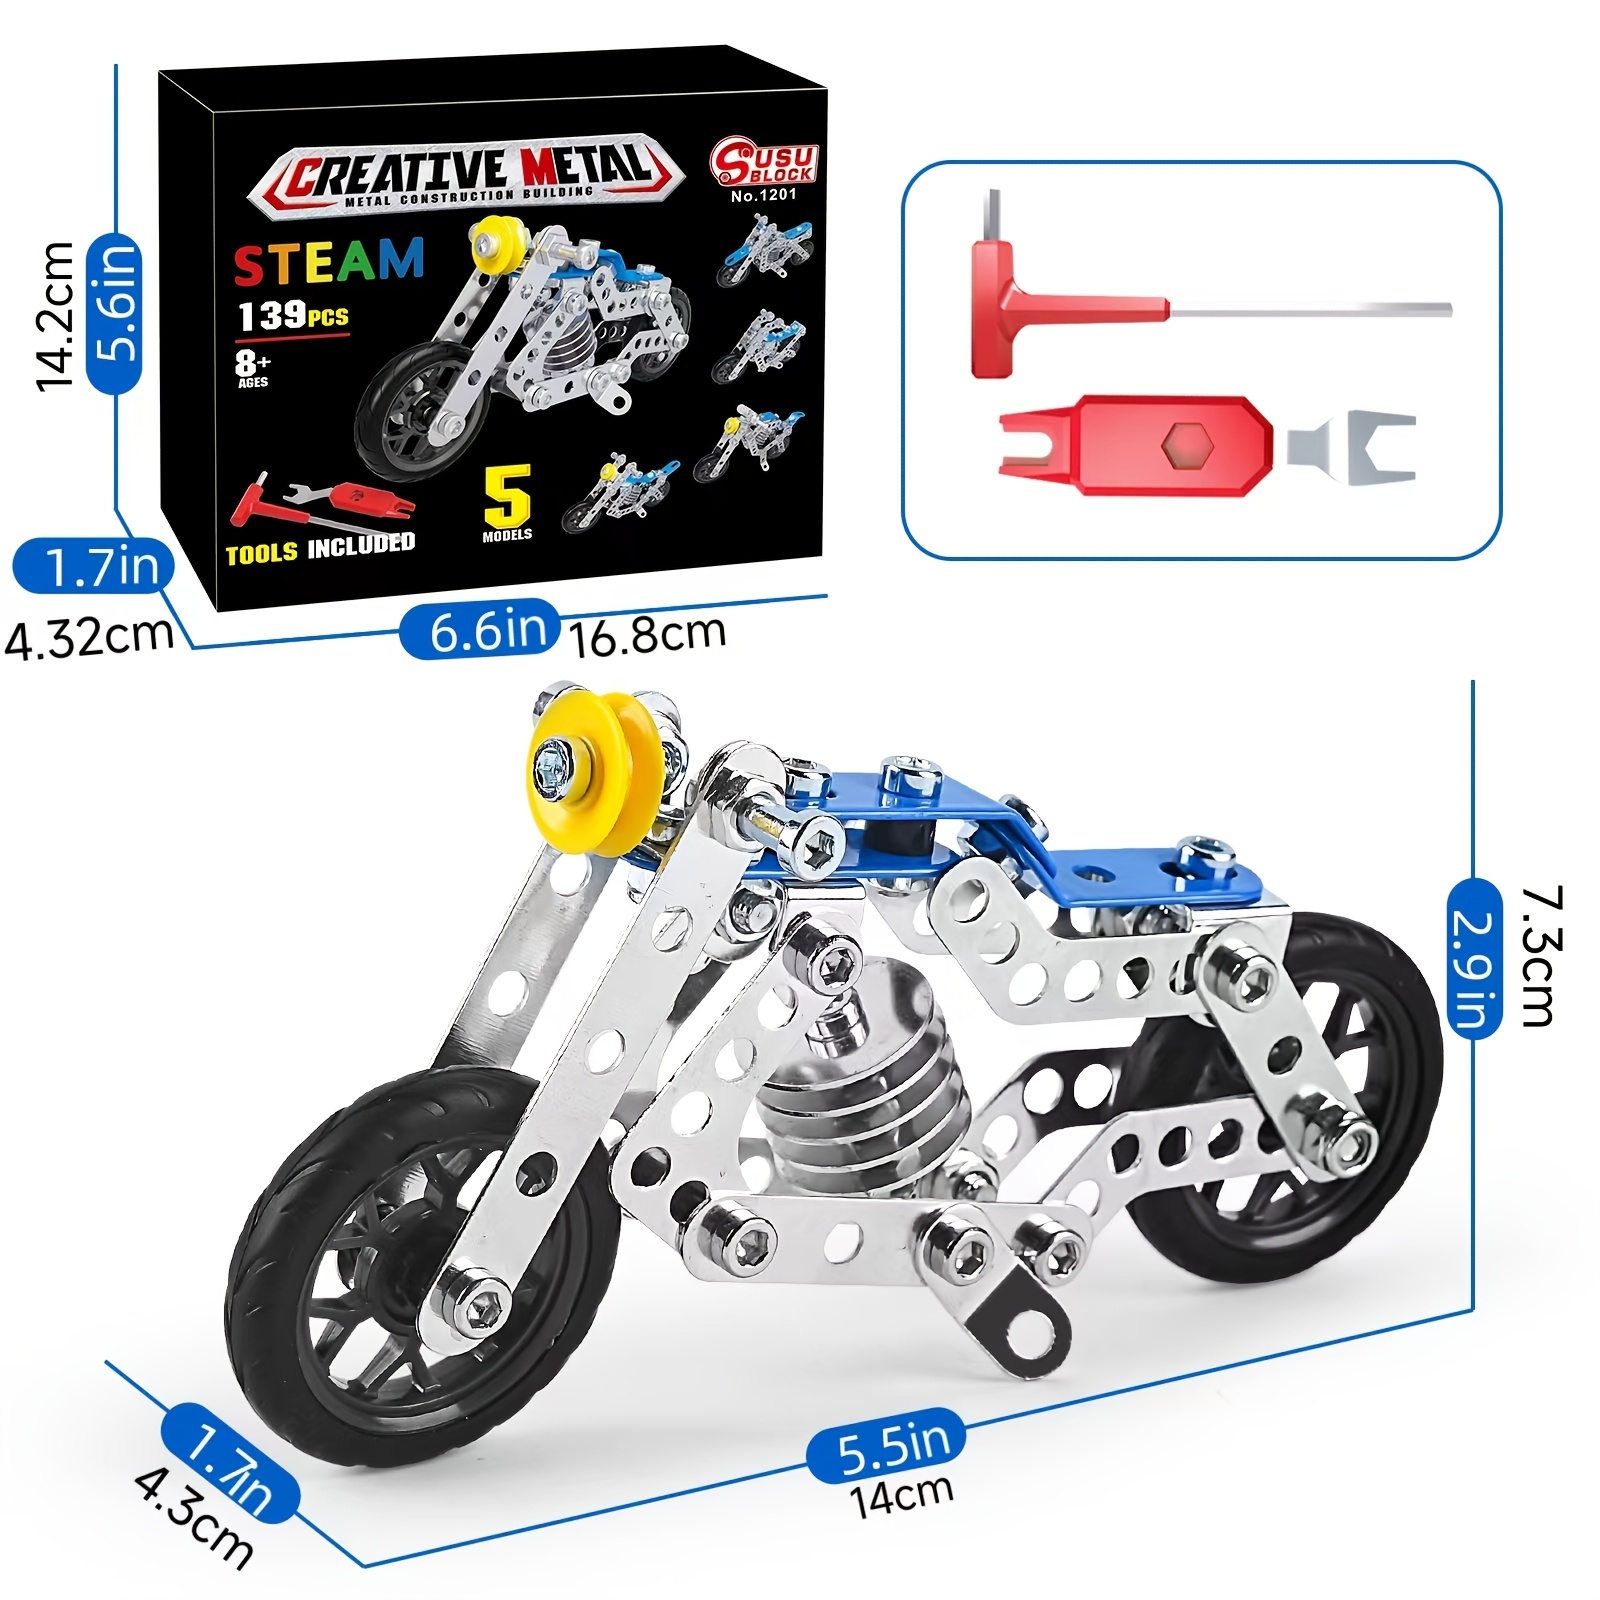 Meccano by Erector, Starter Set, Motorcycle Model Kit 